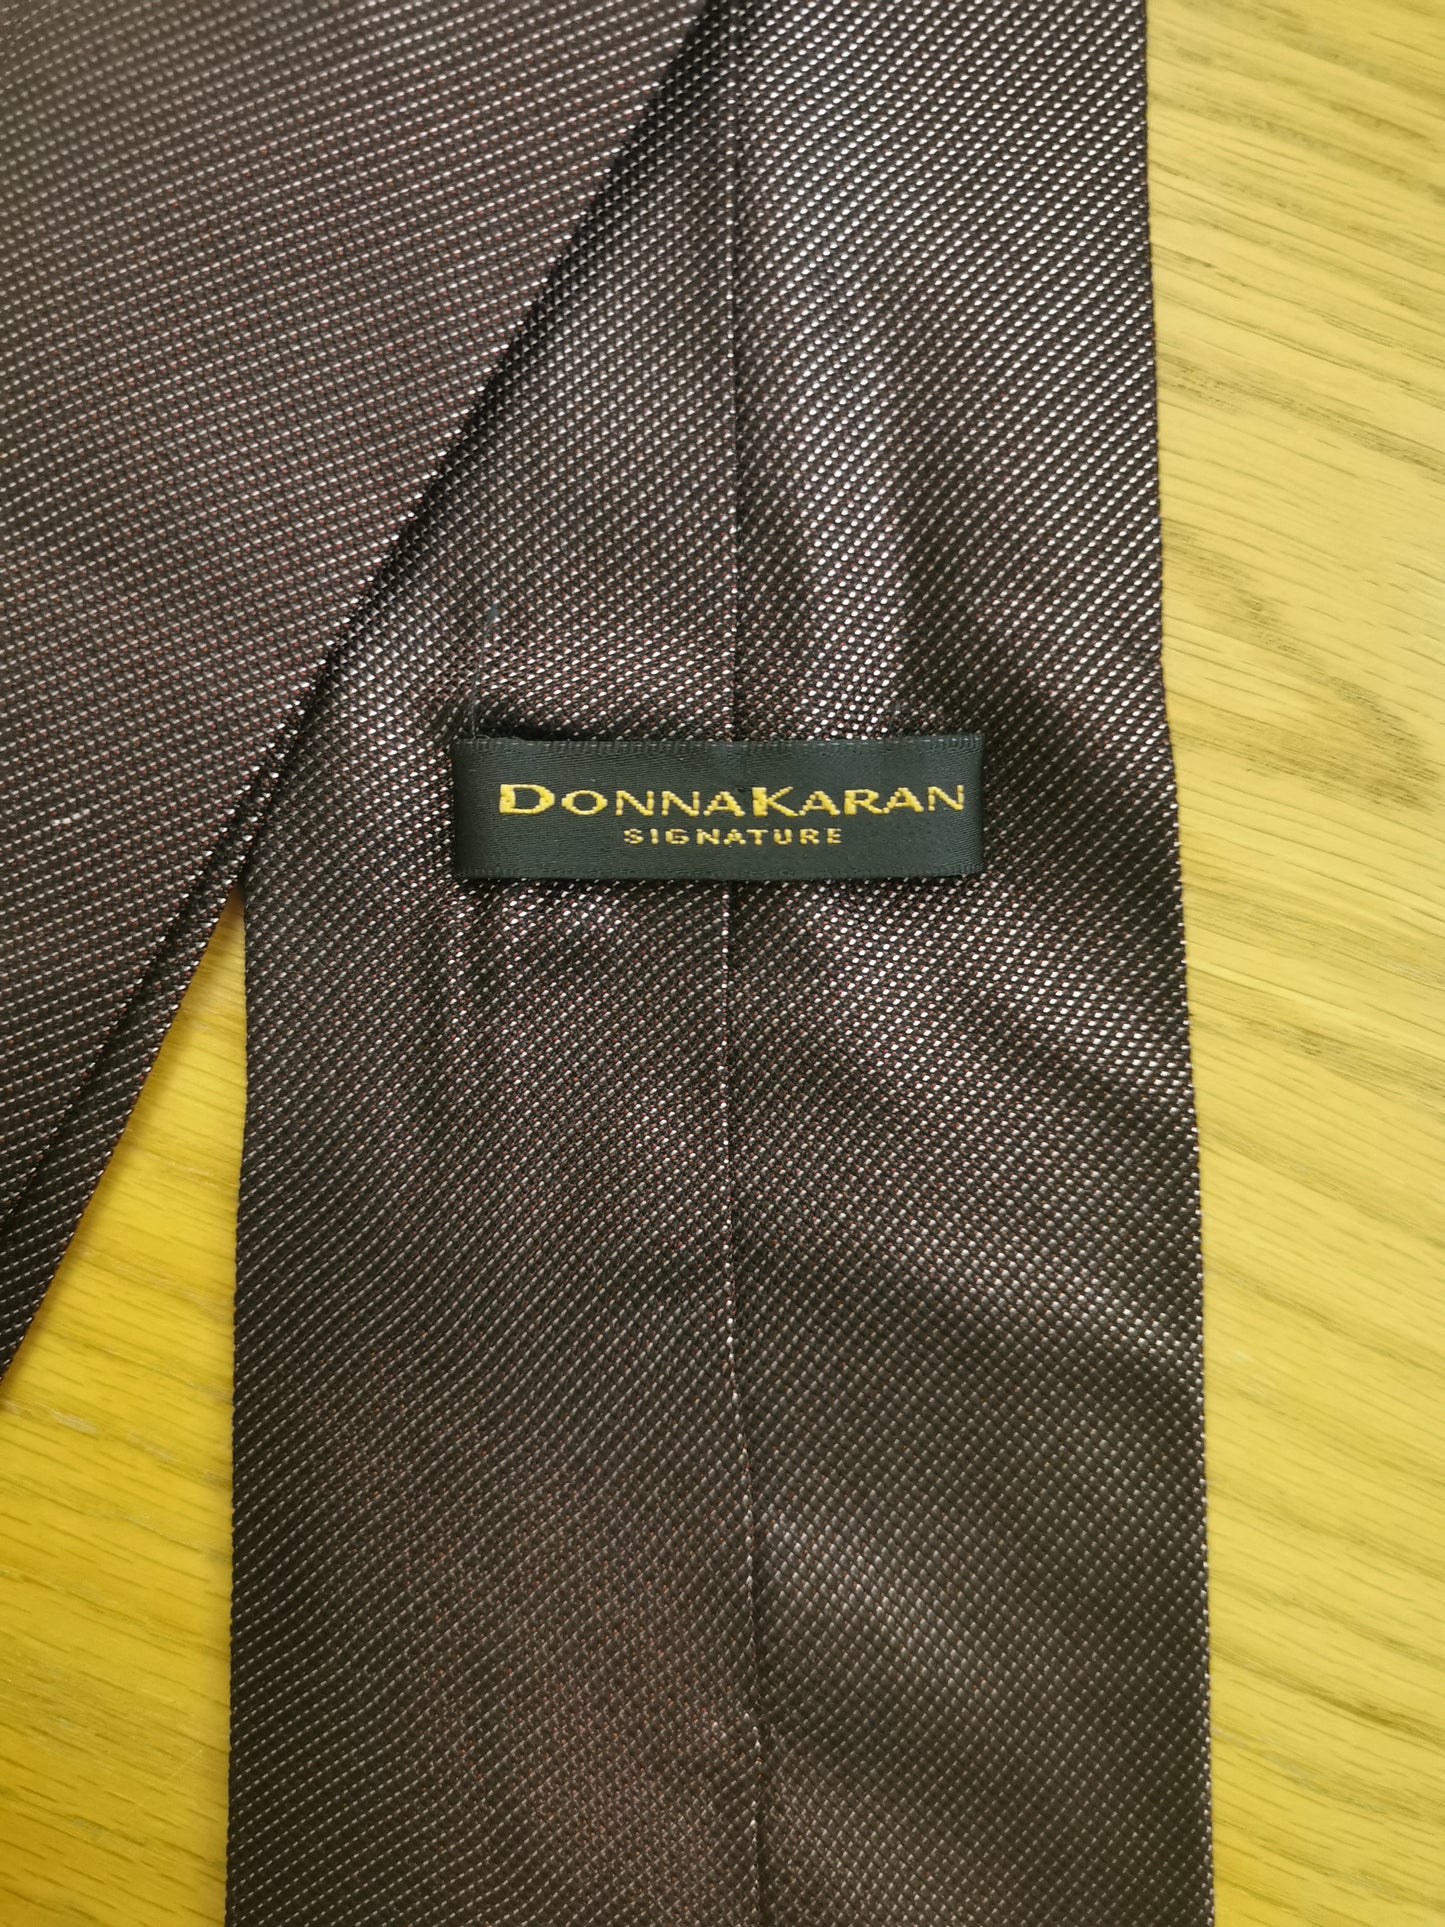 93% silk Donna Karan Signature tie